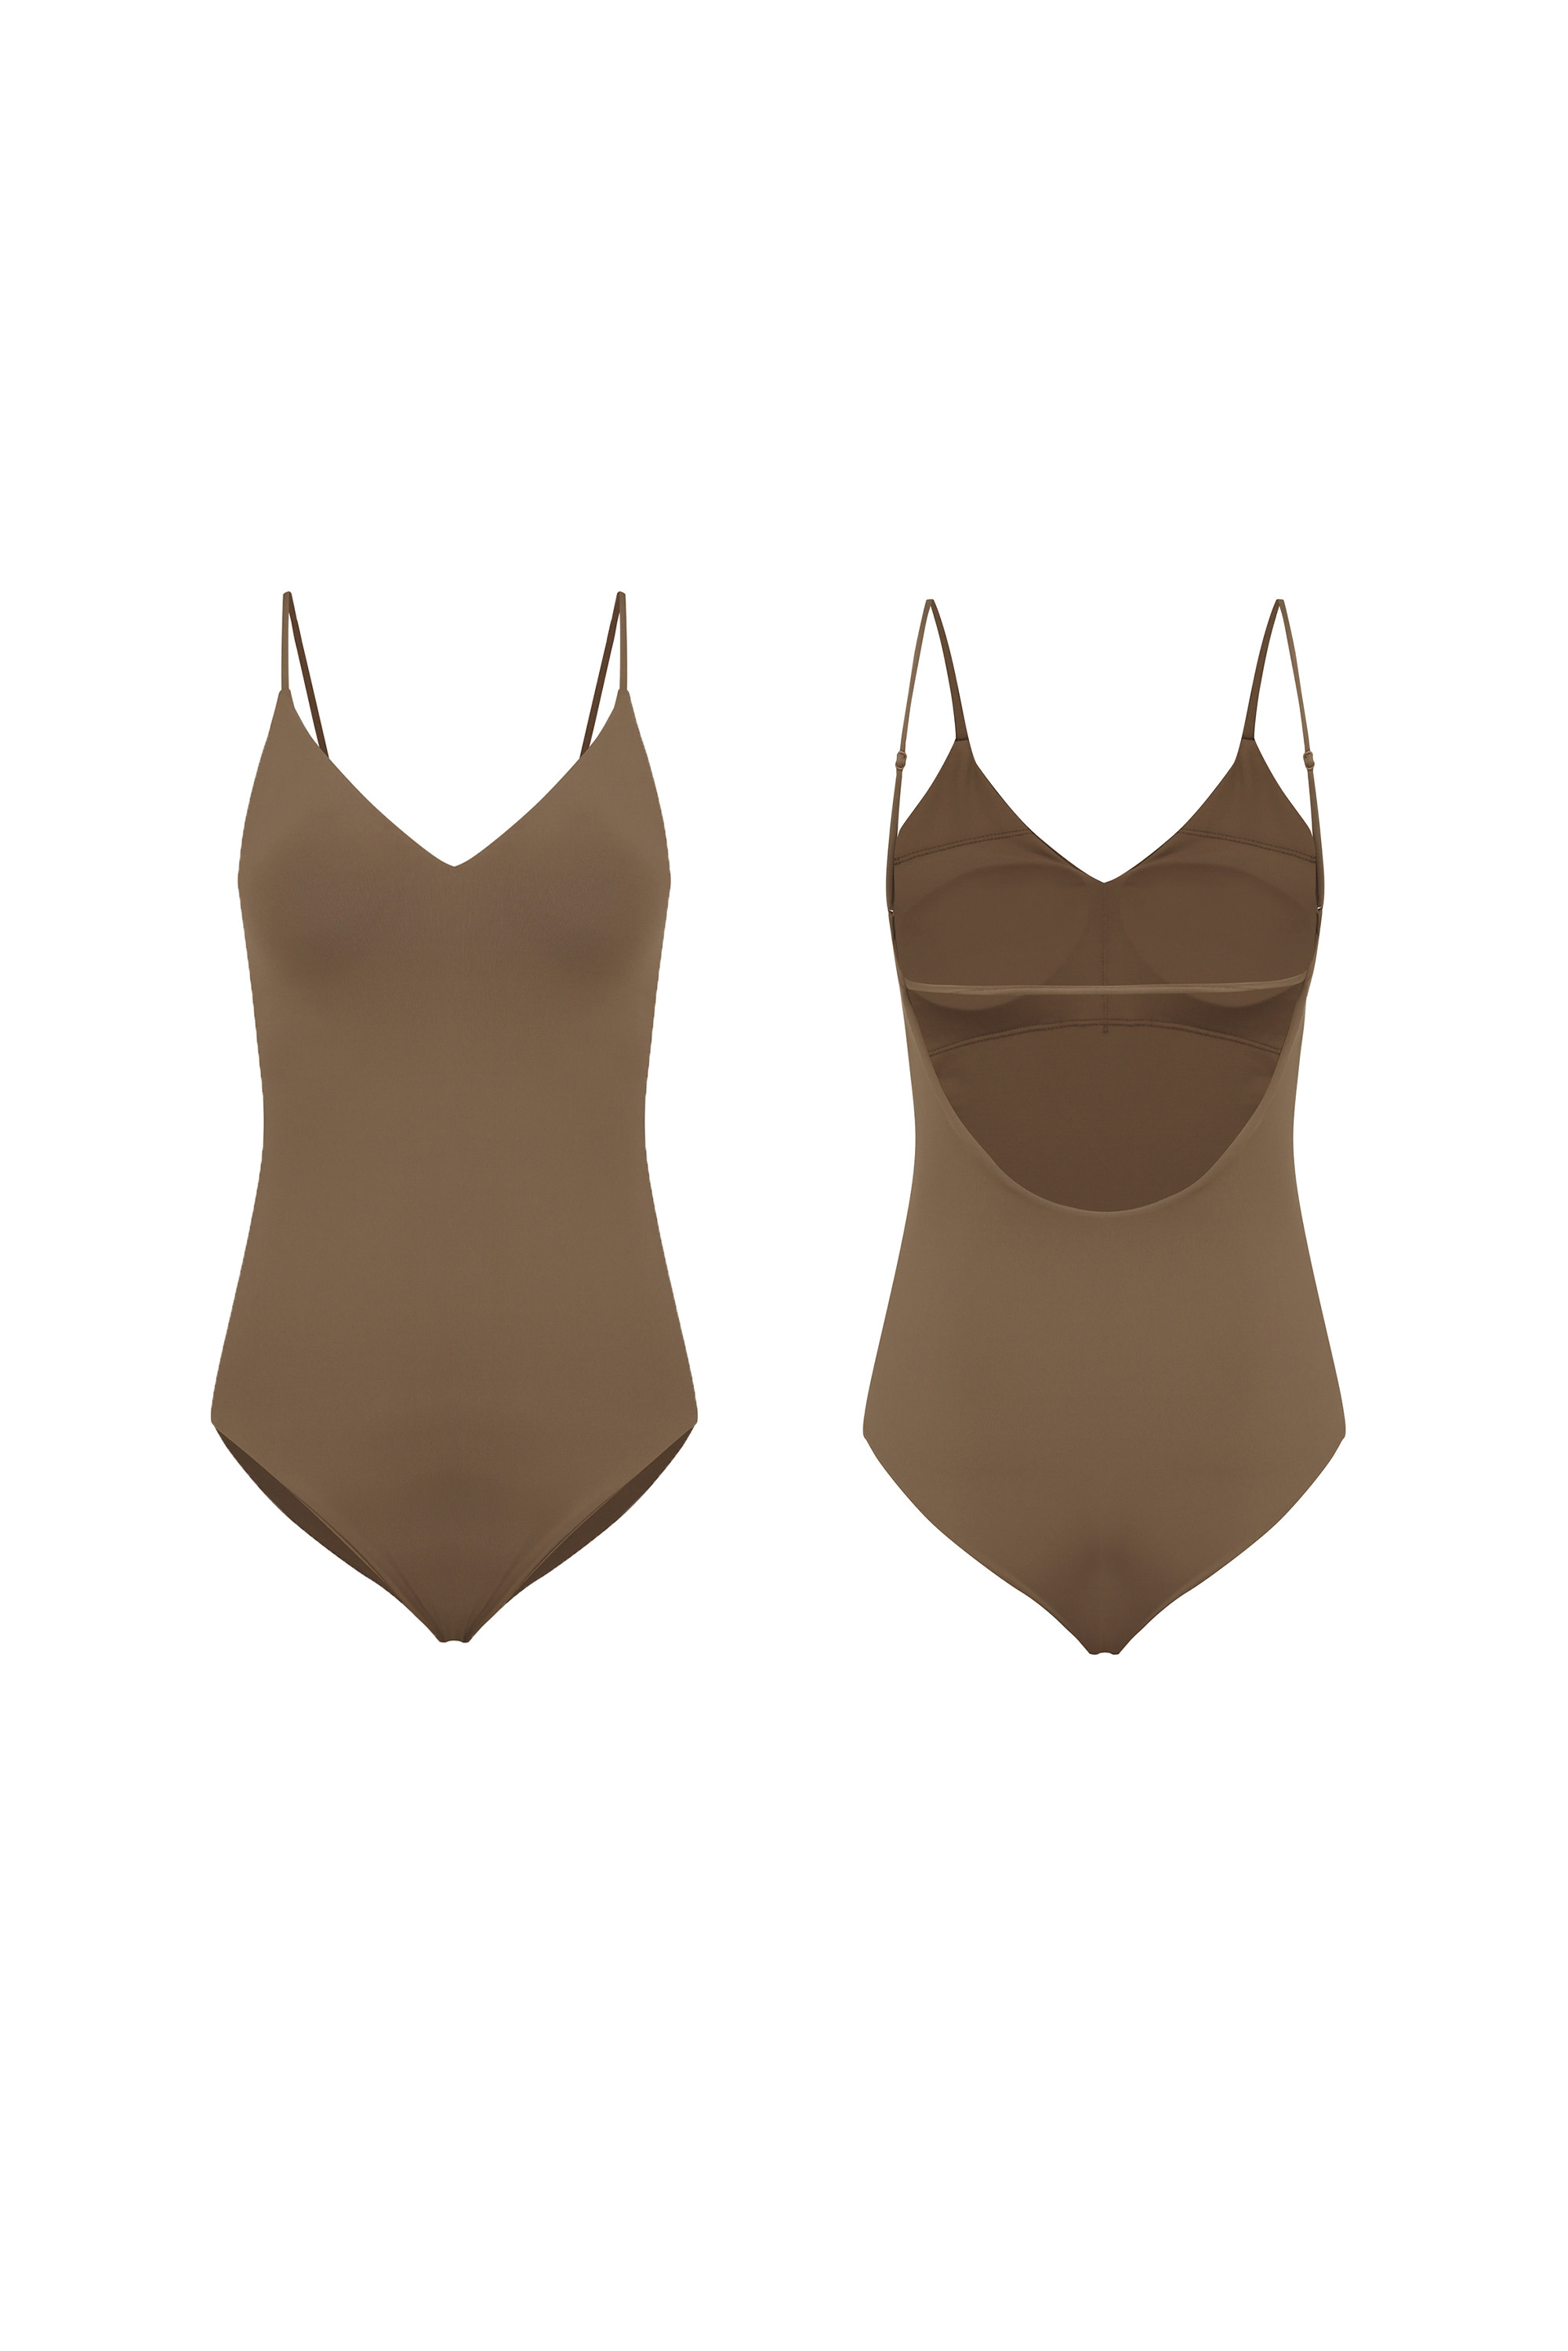 RVIS-swim-onepiece-brown.jpg